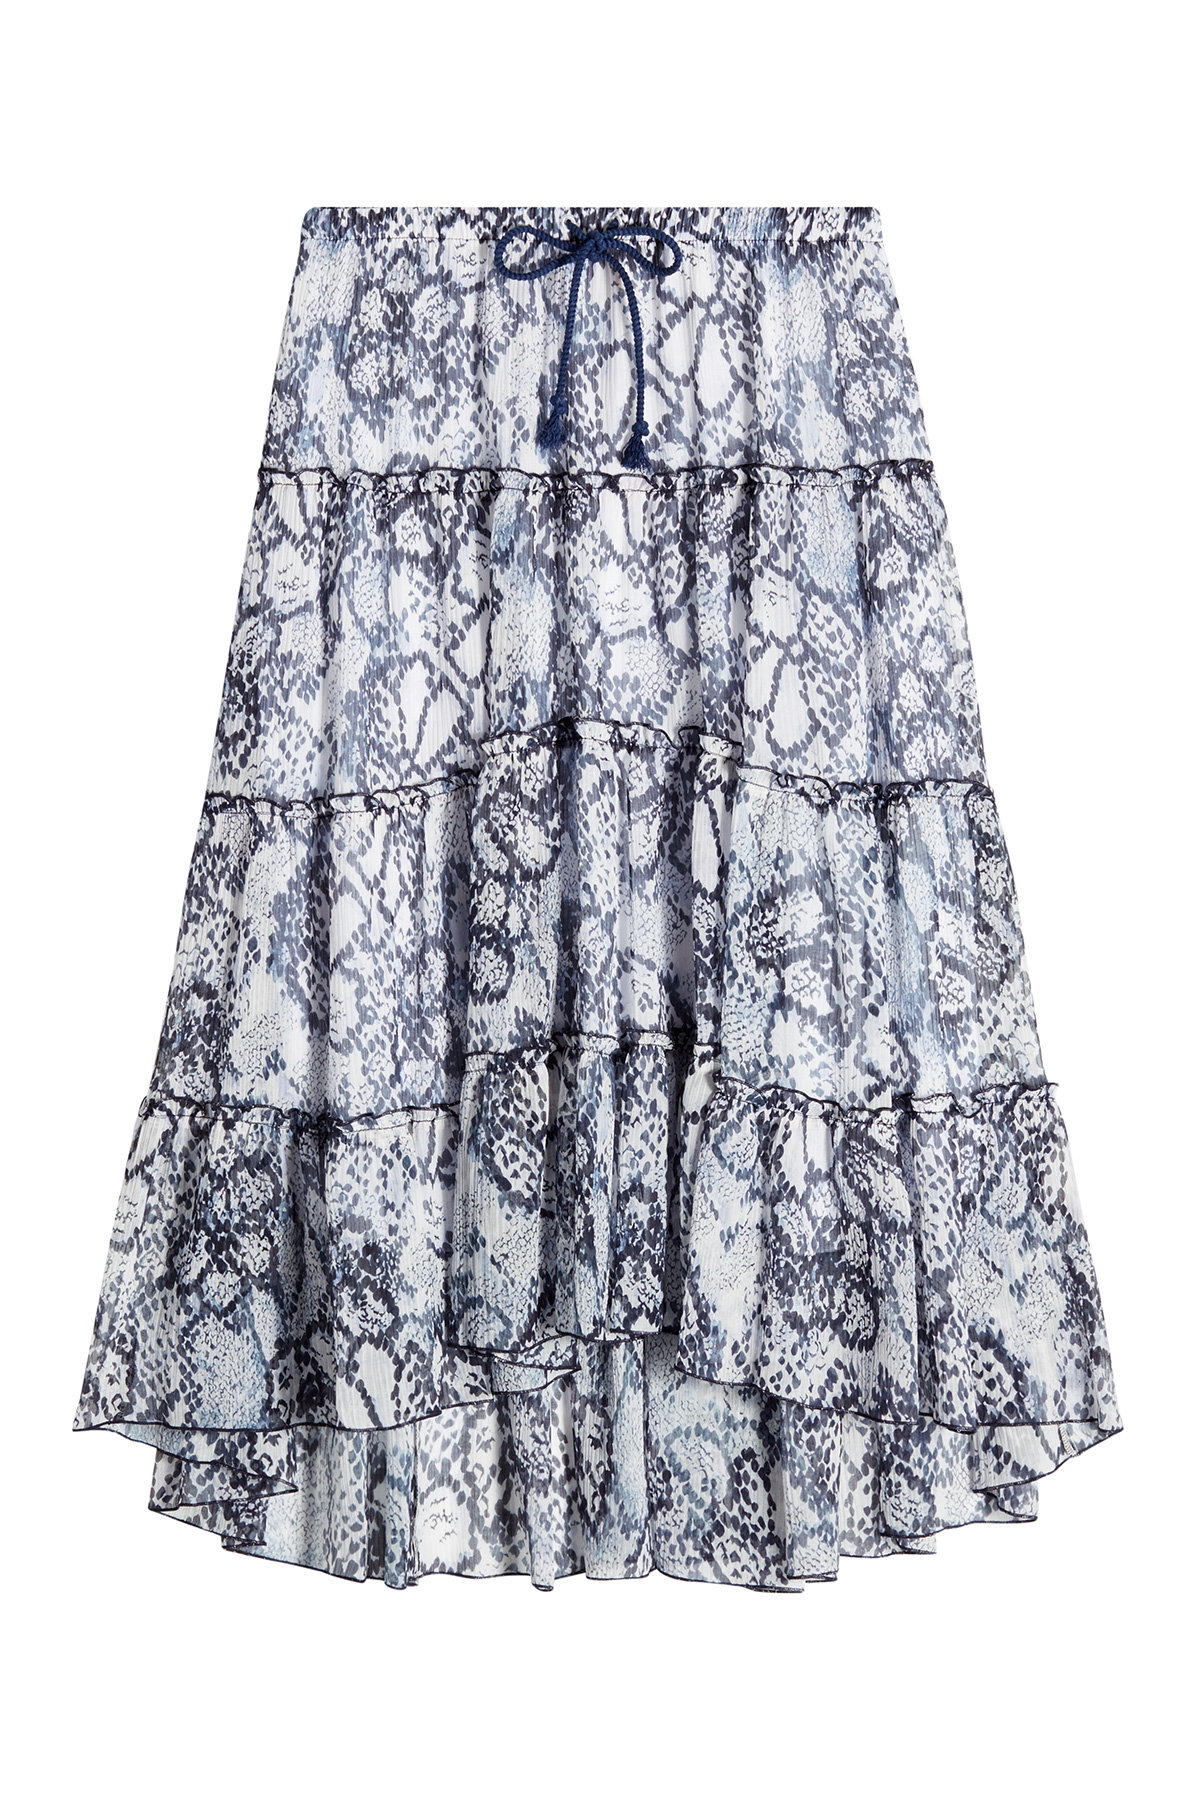 See by Chloe - Cotton-Silk Printed Skirt